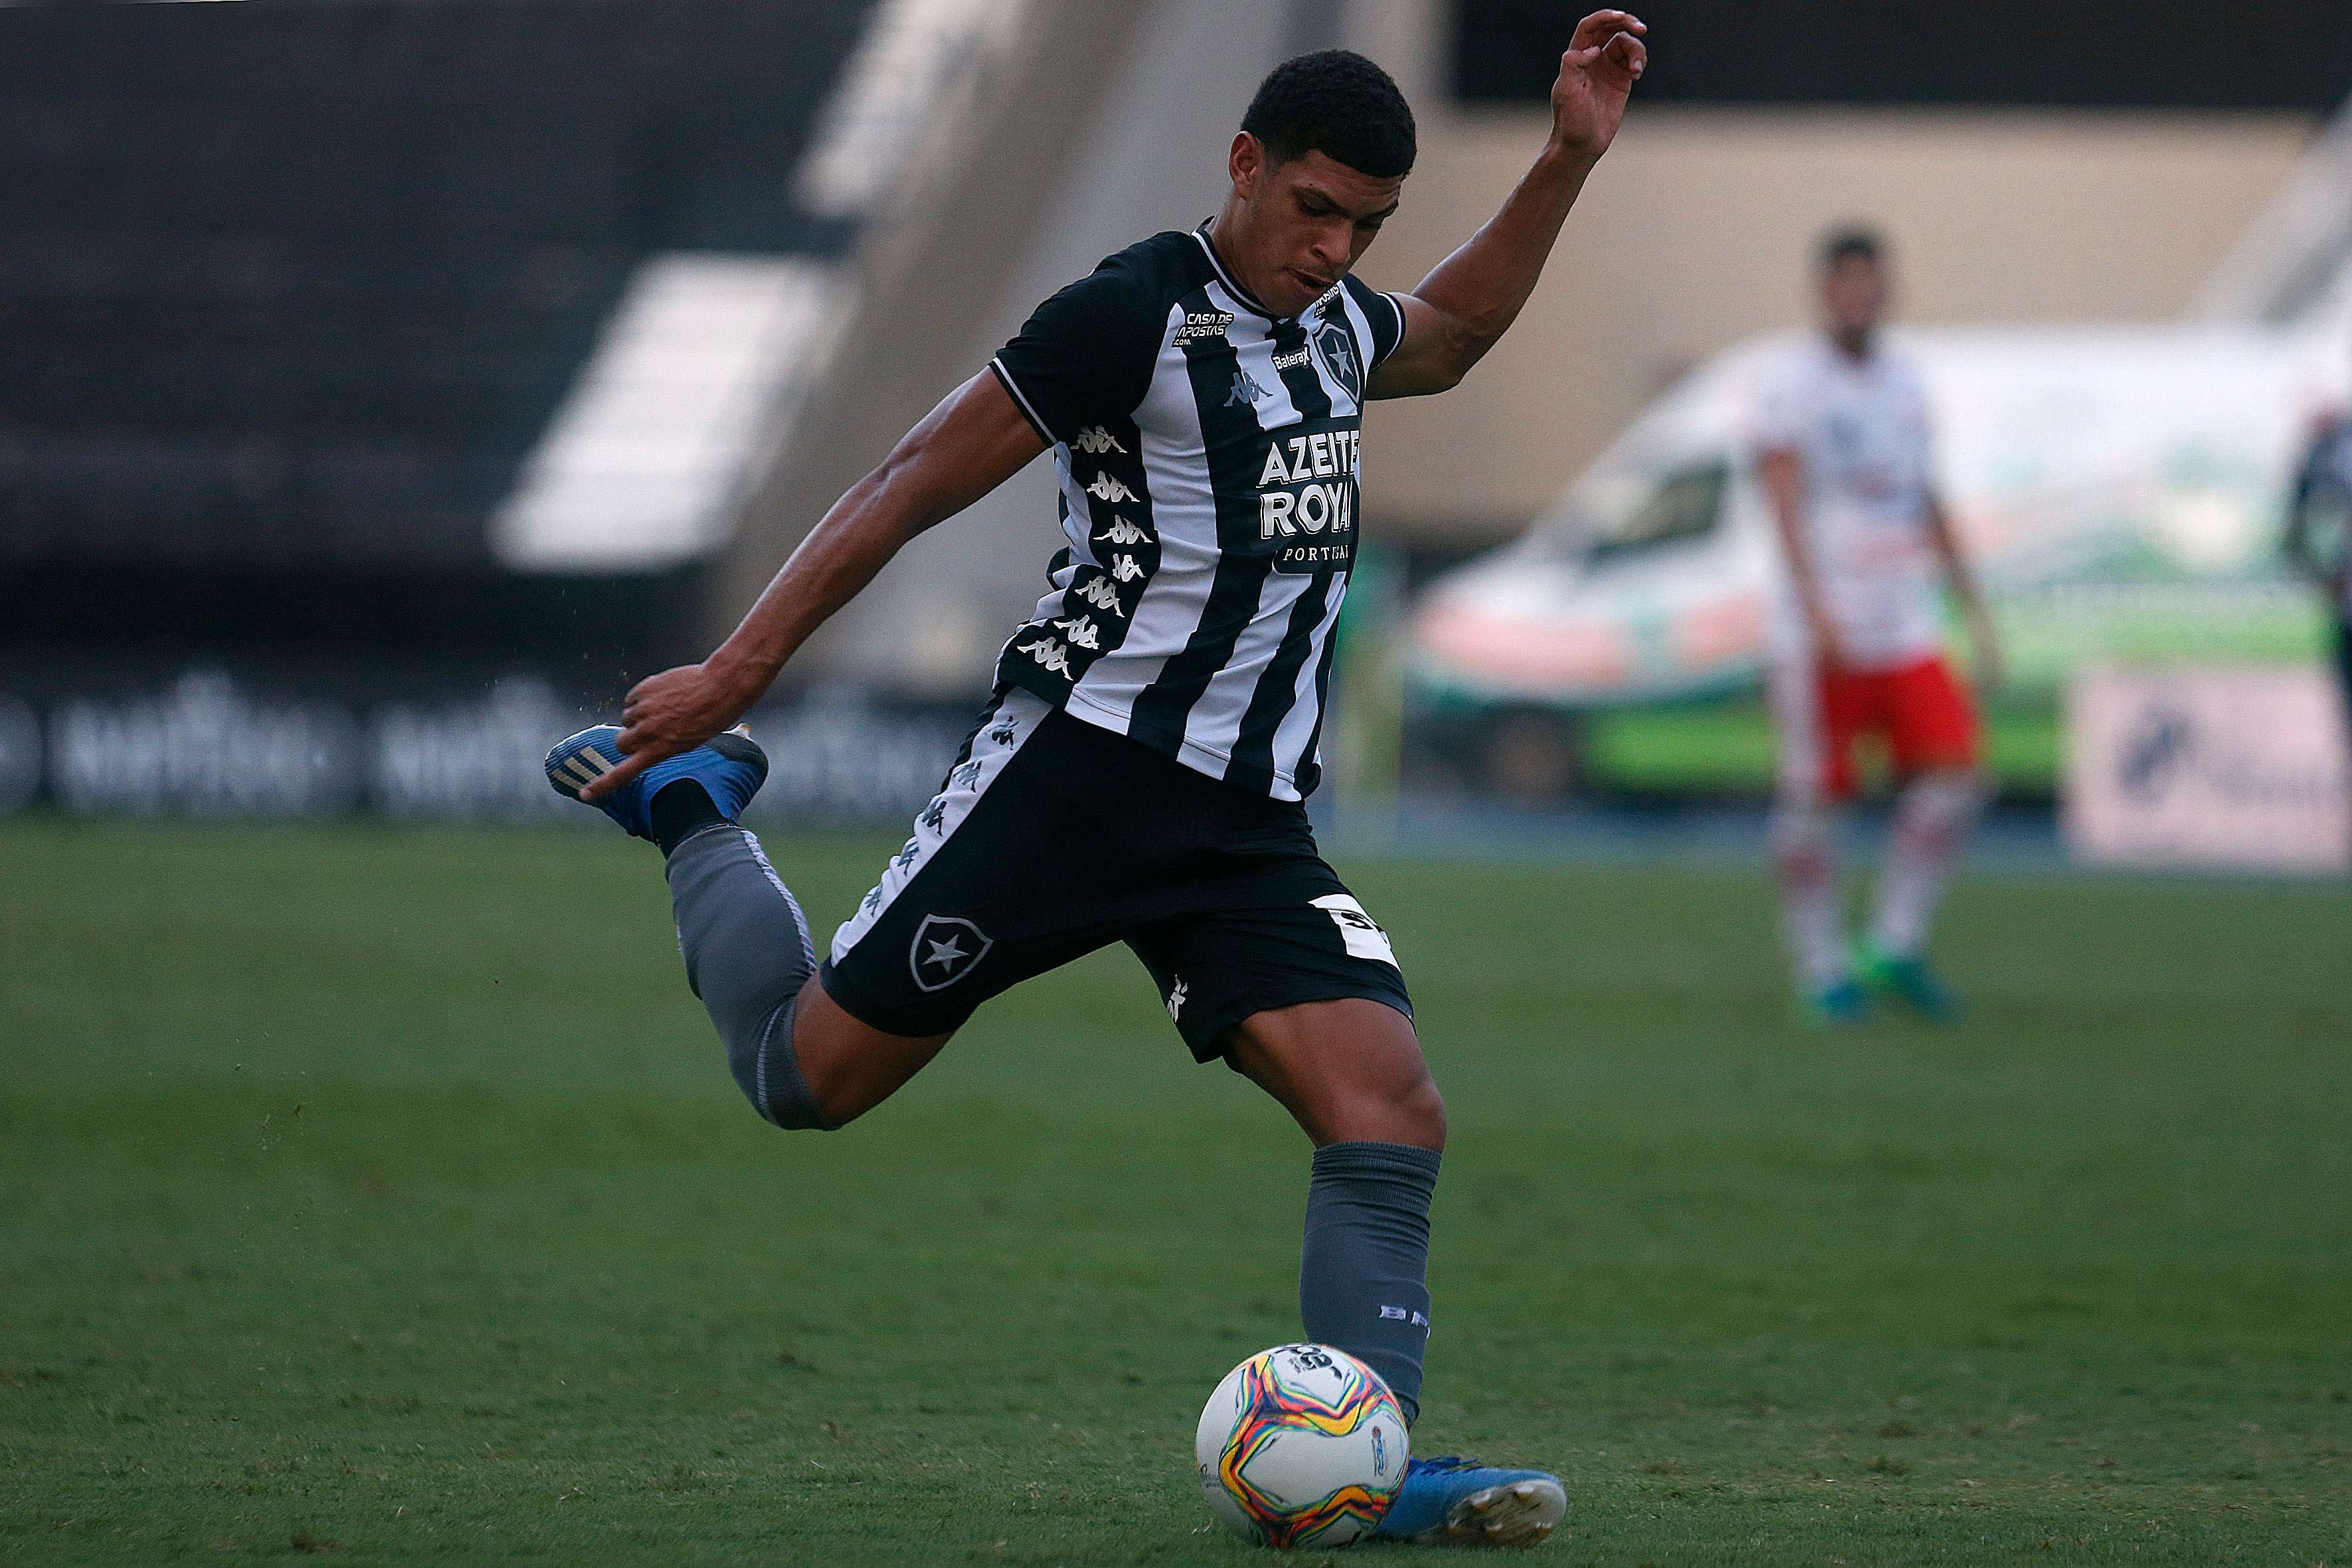 Luis Henrique Botafogo Bangu Carioca 2019